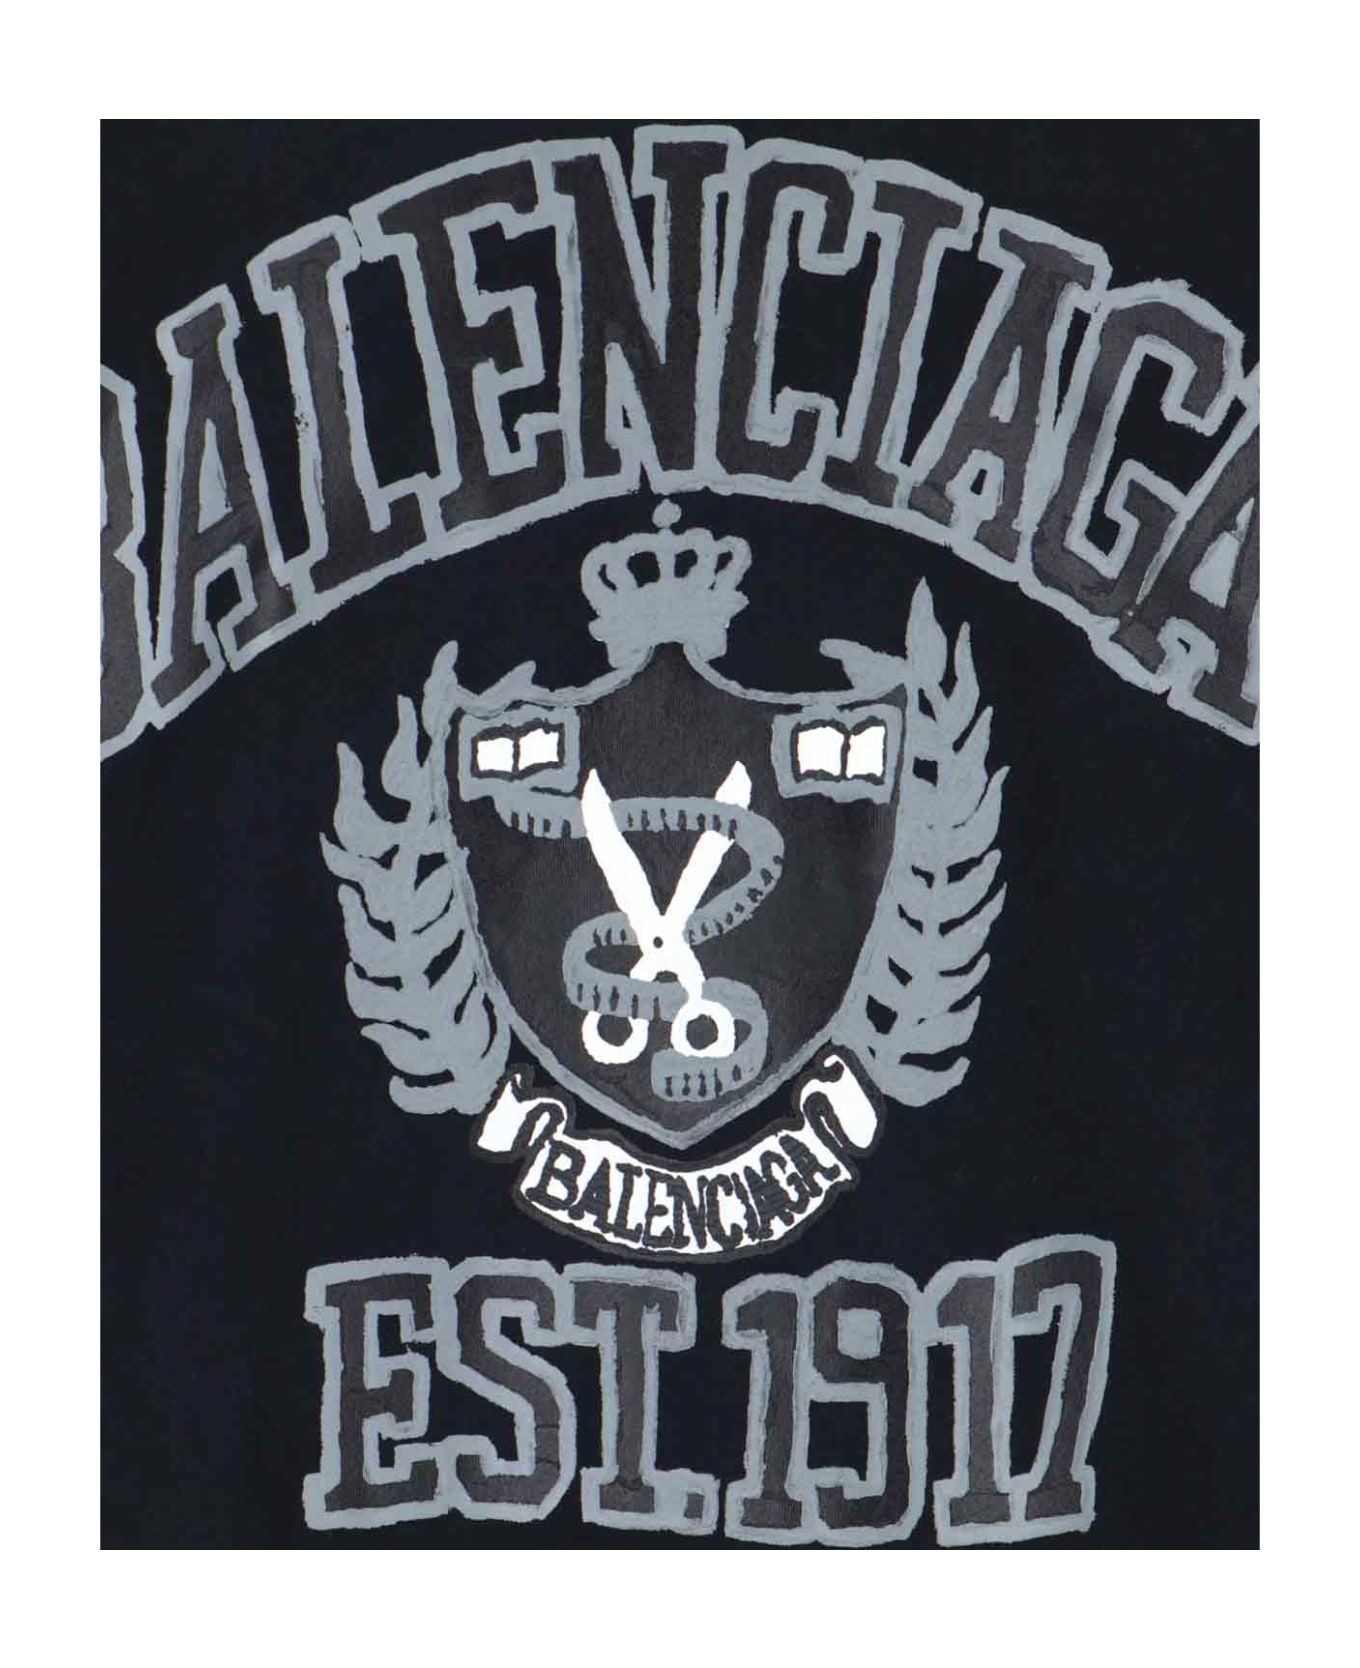 Balenciaga Logo T-shirt - Black   シャツ